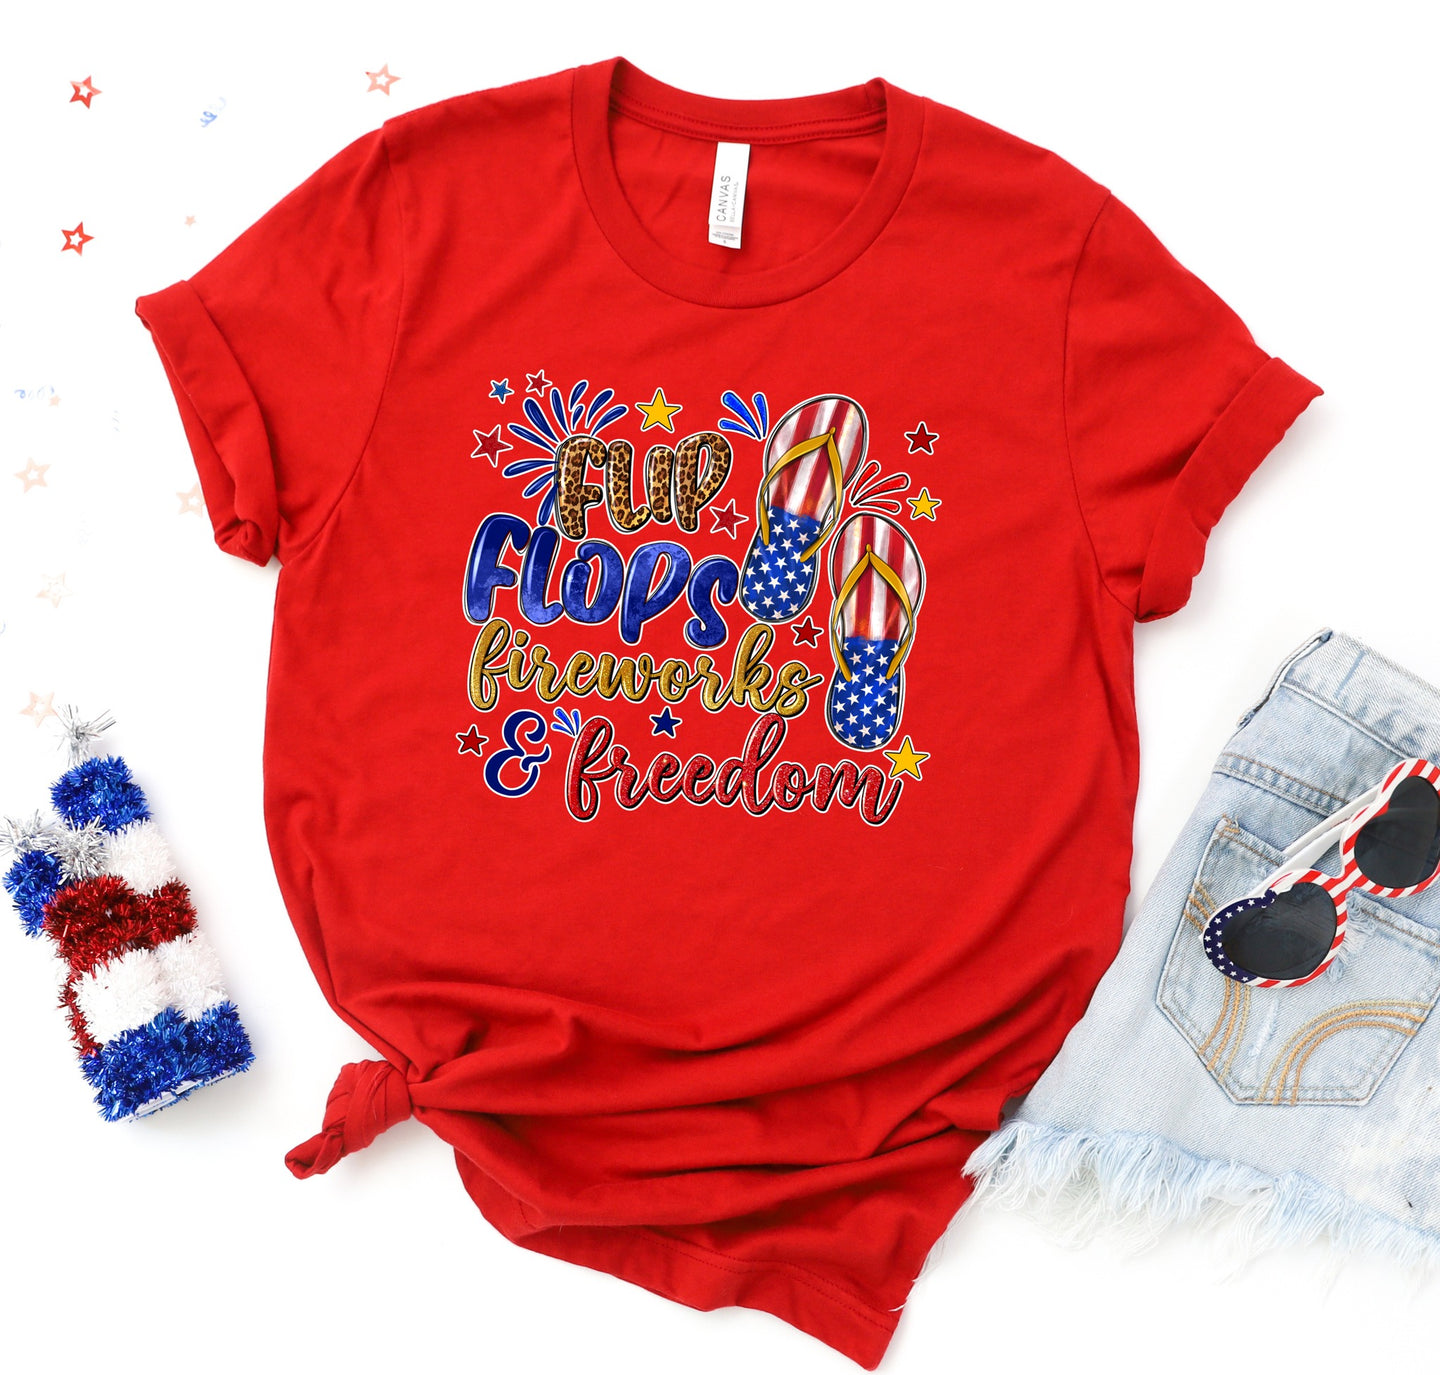 Flip flops, Fireworks, & Freedom Graphic T-Shirt